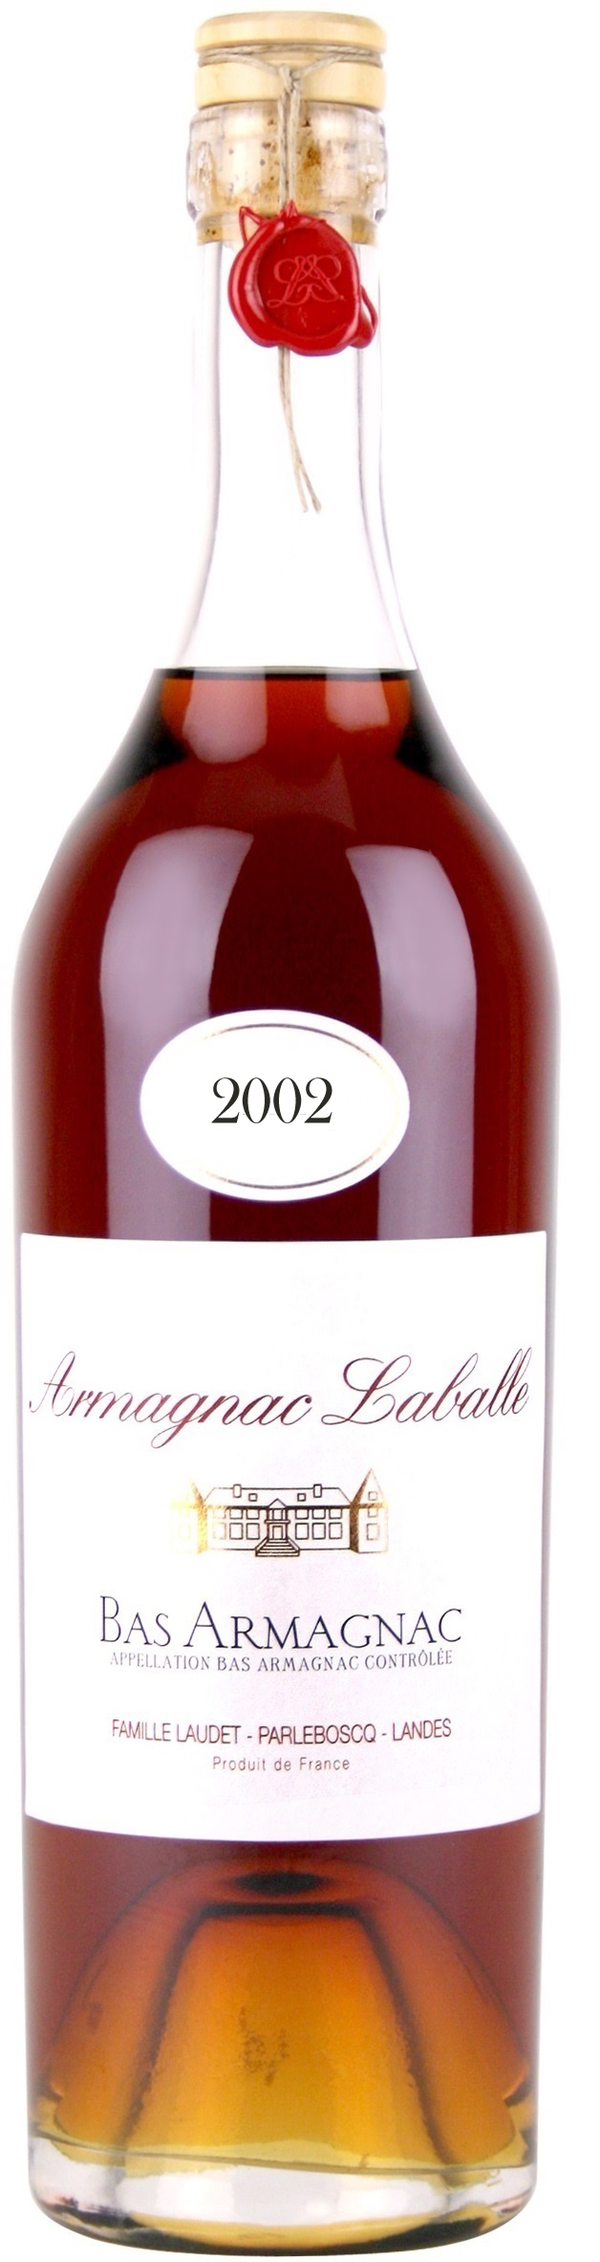 Château Laballe Bas Armagnac 2002